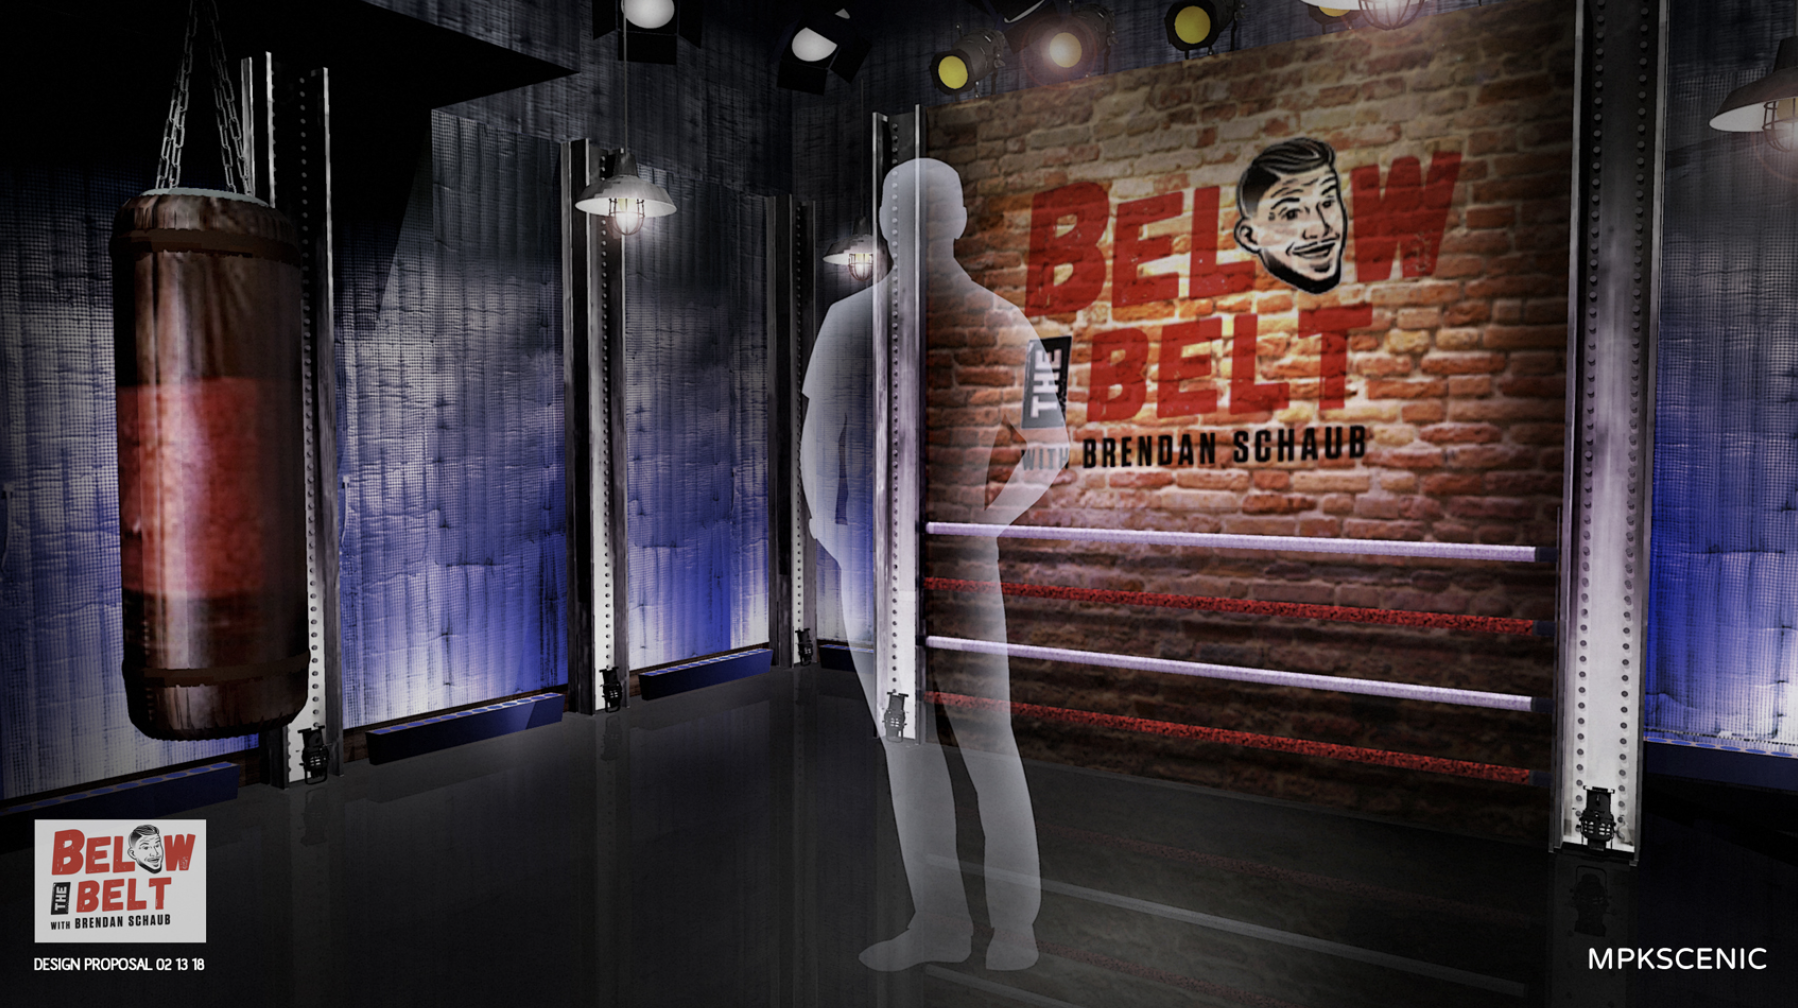 BELOW the BELT showtime 2 MPKScenic.png